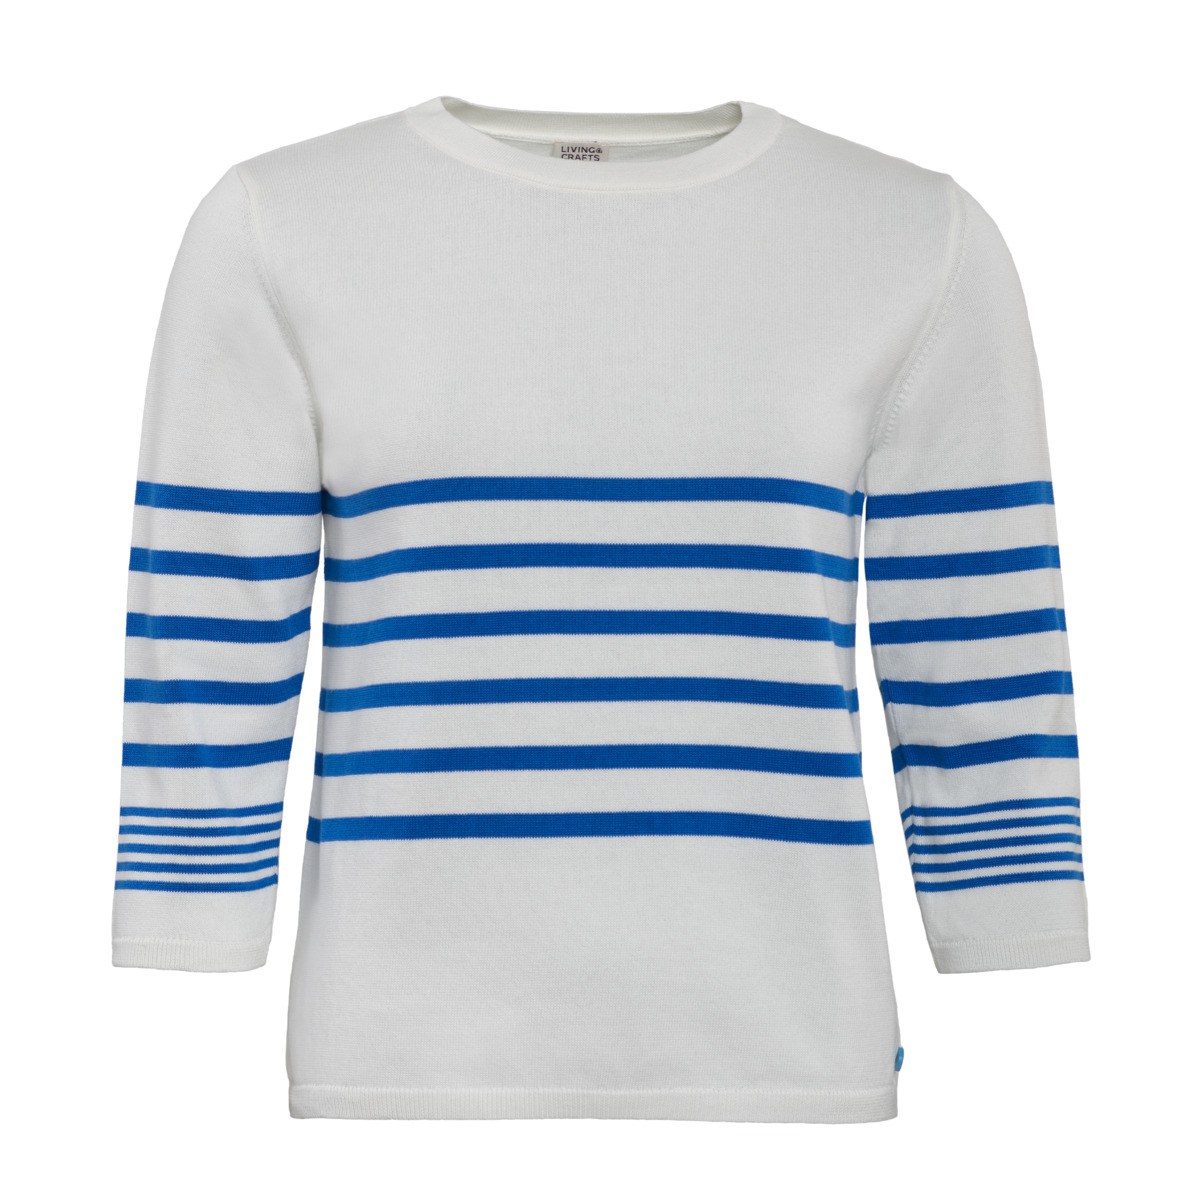 Striped Sweater, ROMINA